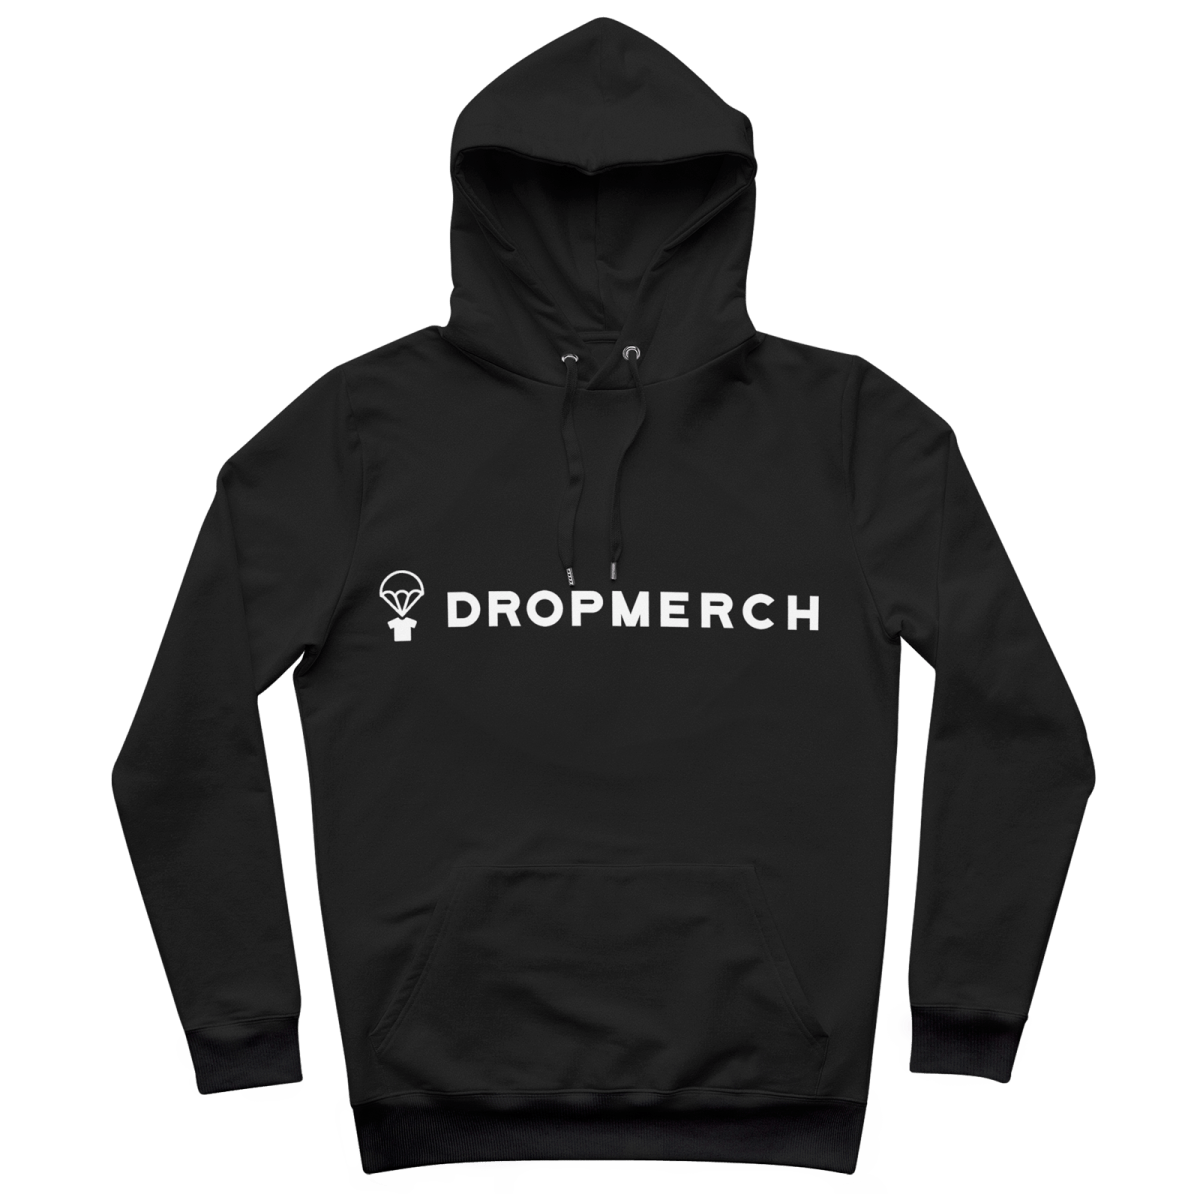 Dropmerch official logo horisontal - Dropmerch